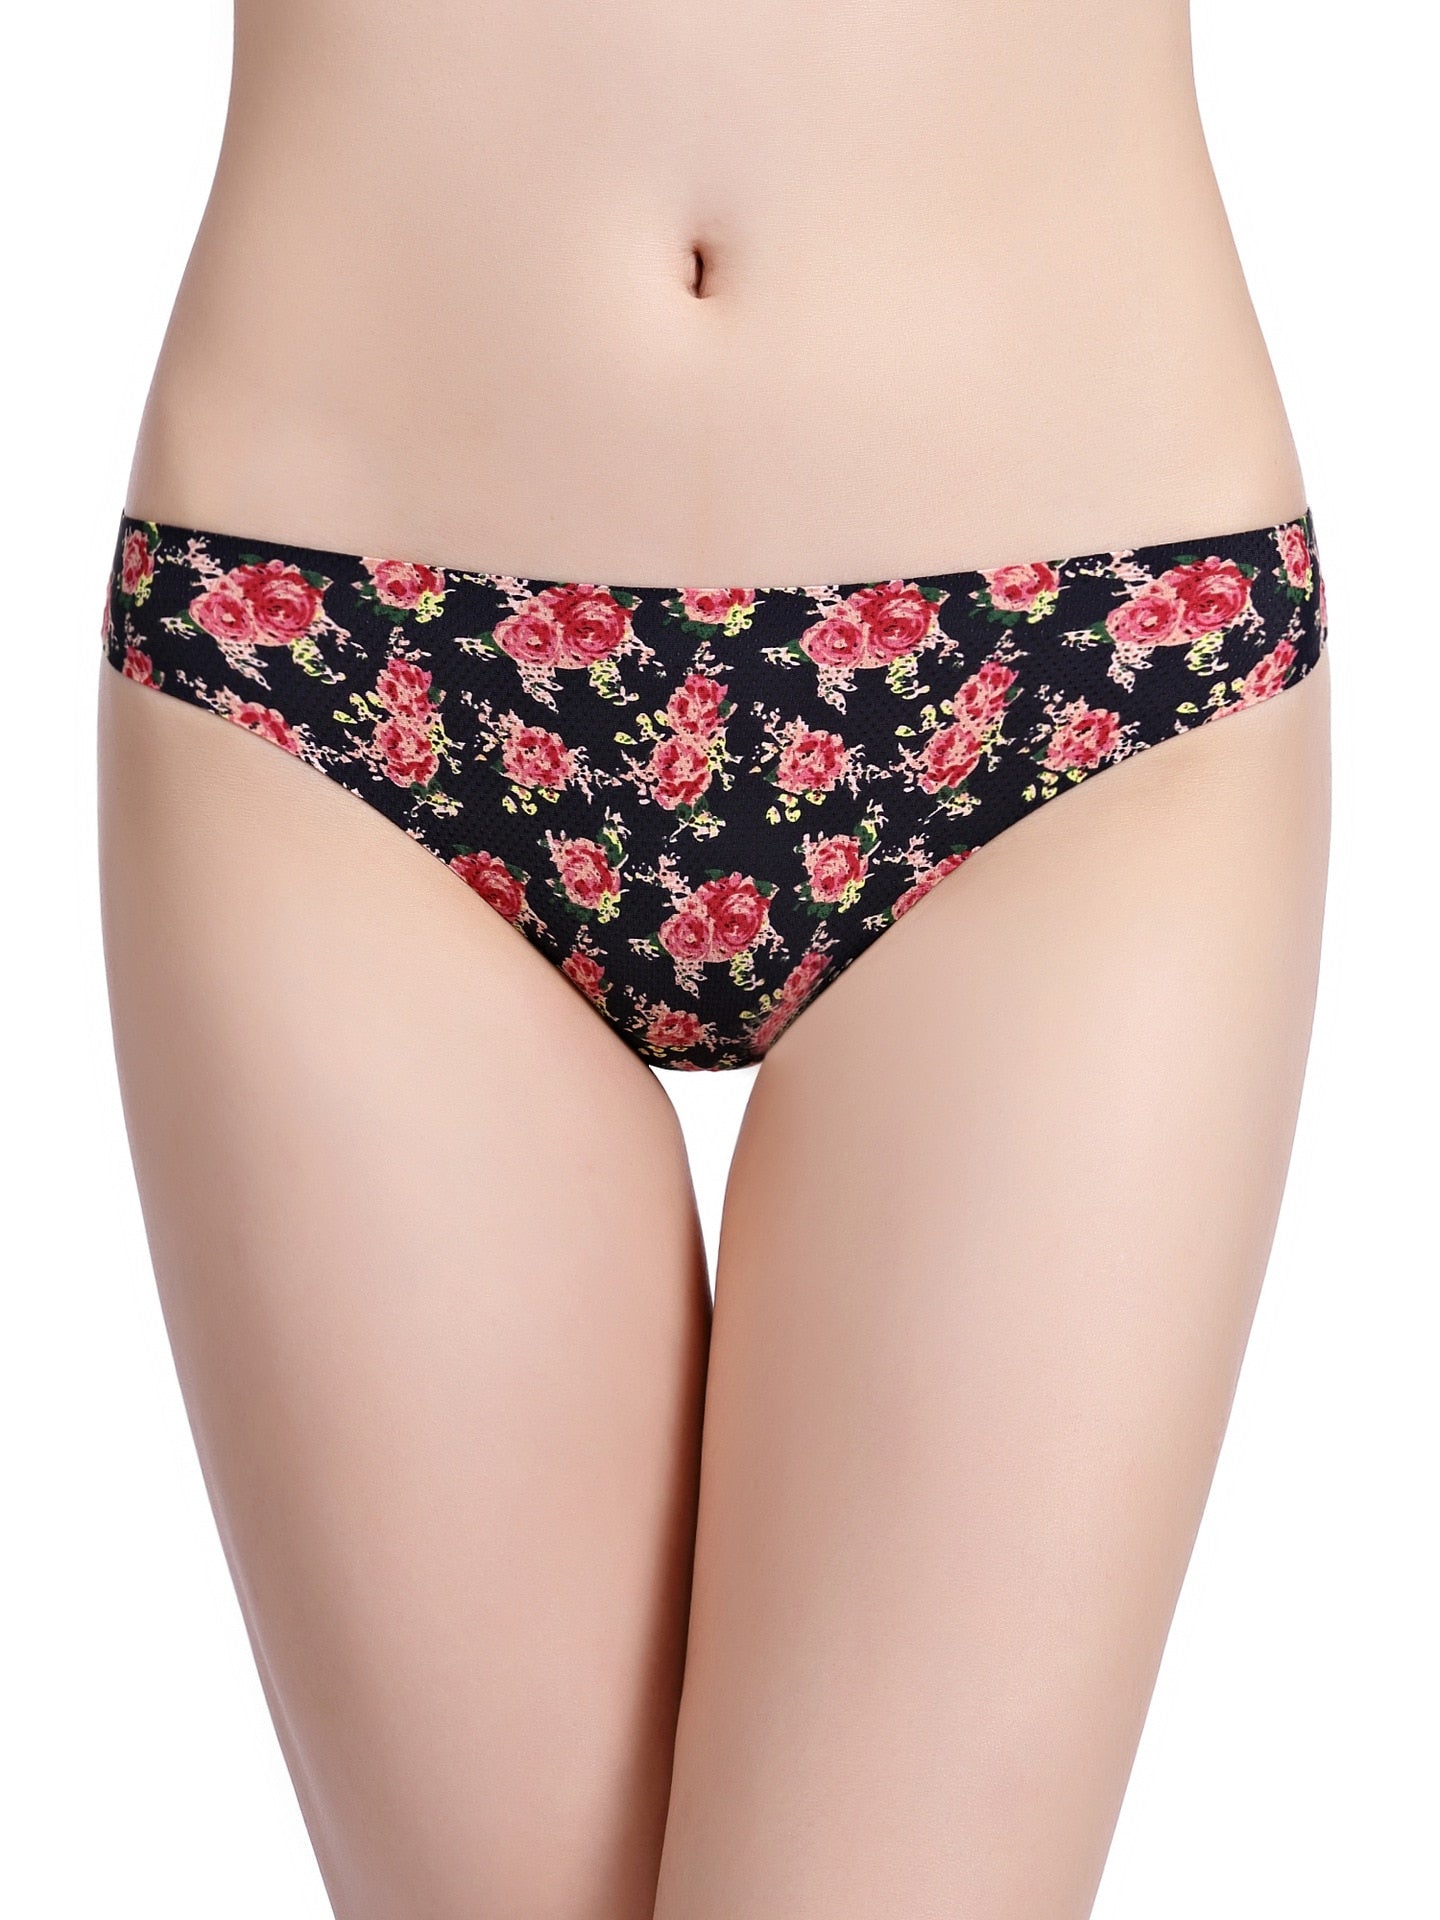 Women's Floral Print Thong Underwear - Black Rose